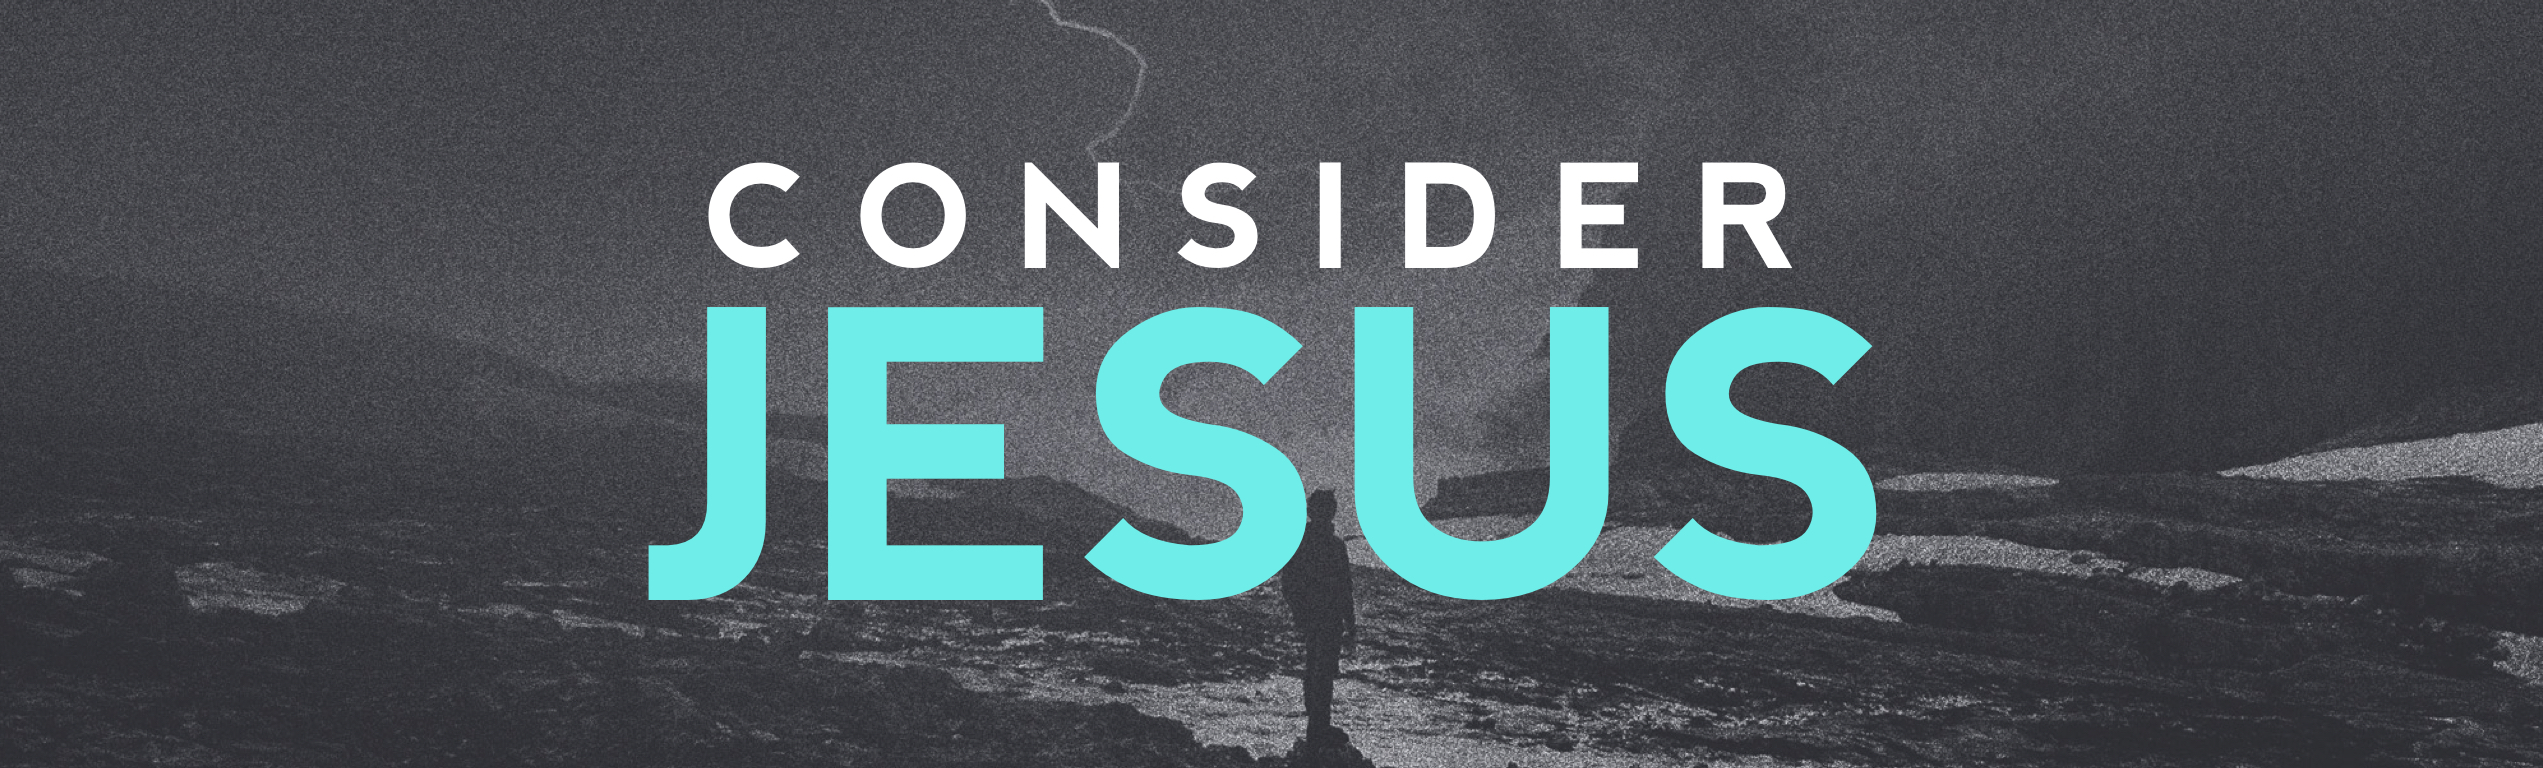 Consider Jesus Image